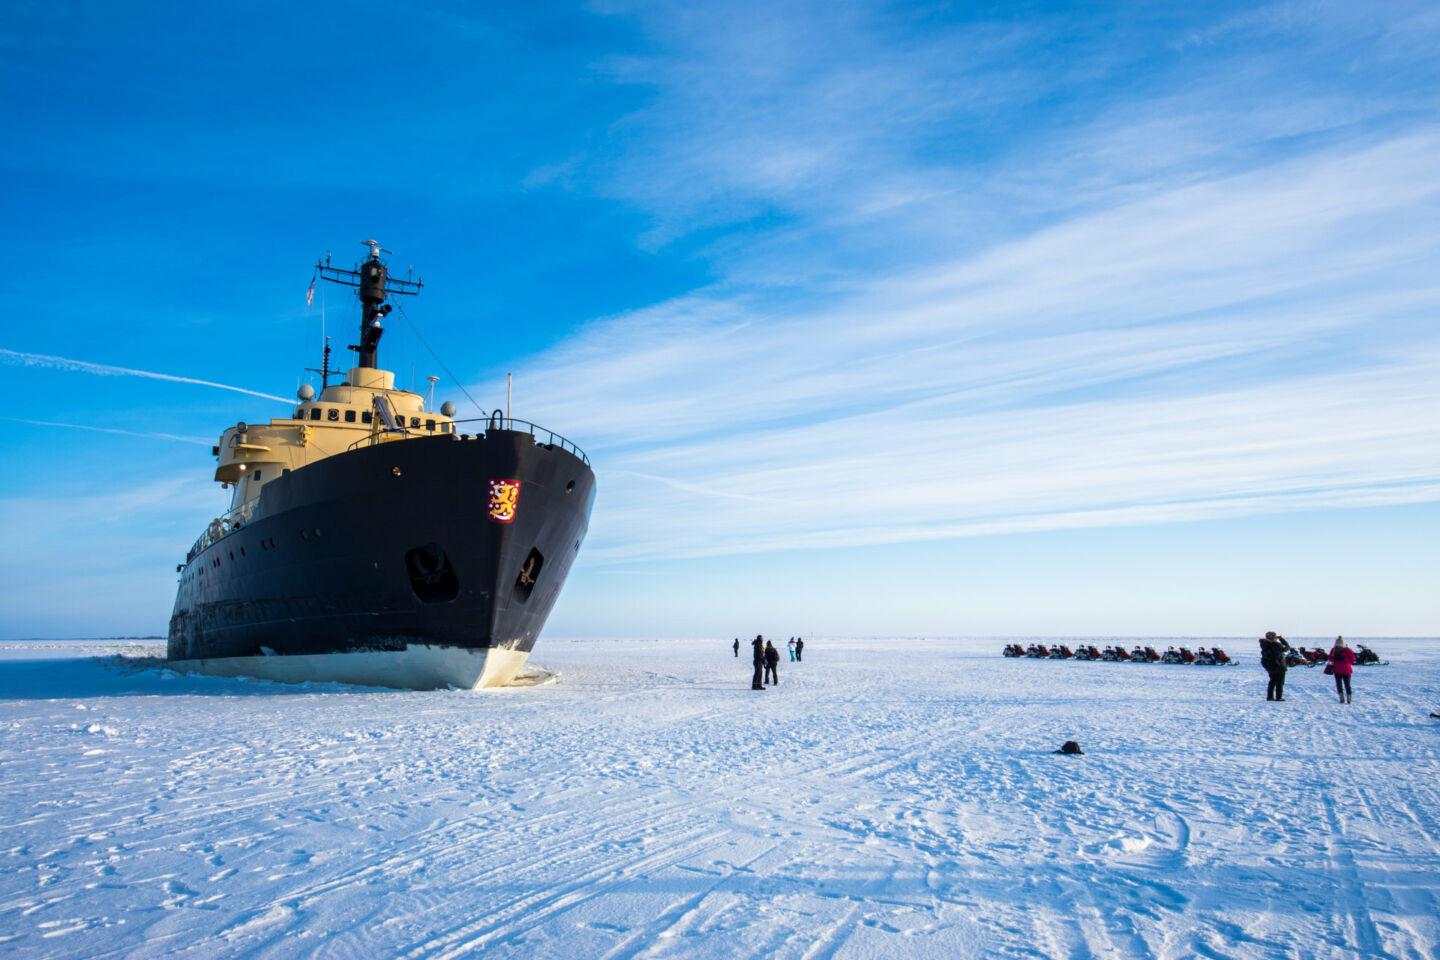 Icebreaker Sampo on the frozen sea in Kemi, a Finnish Lapland holiday destination